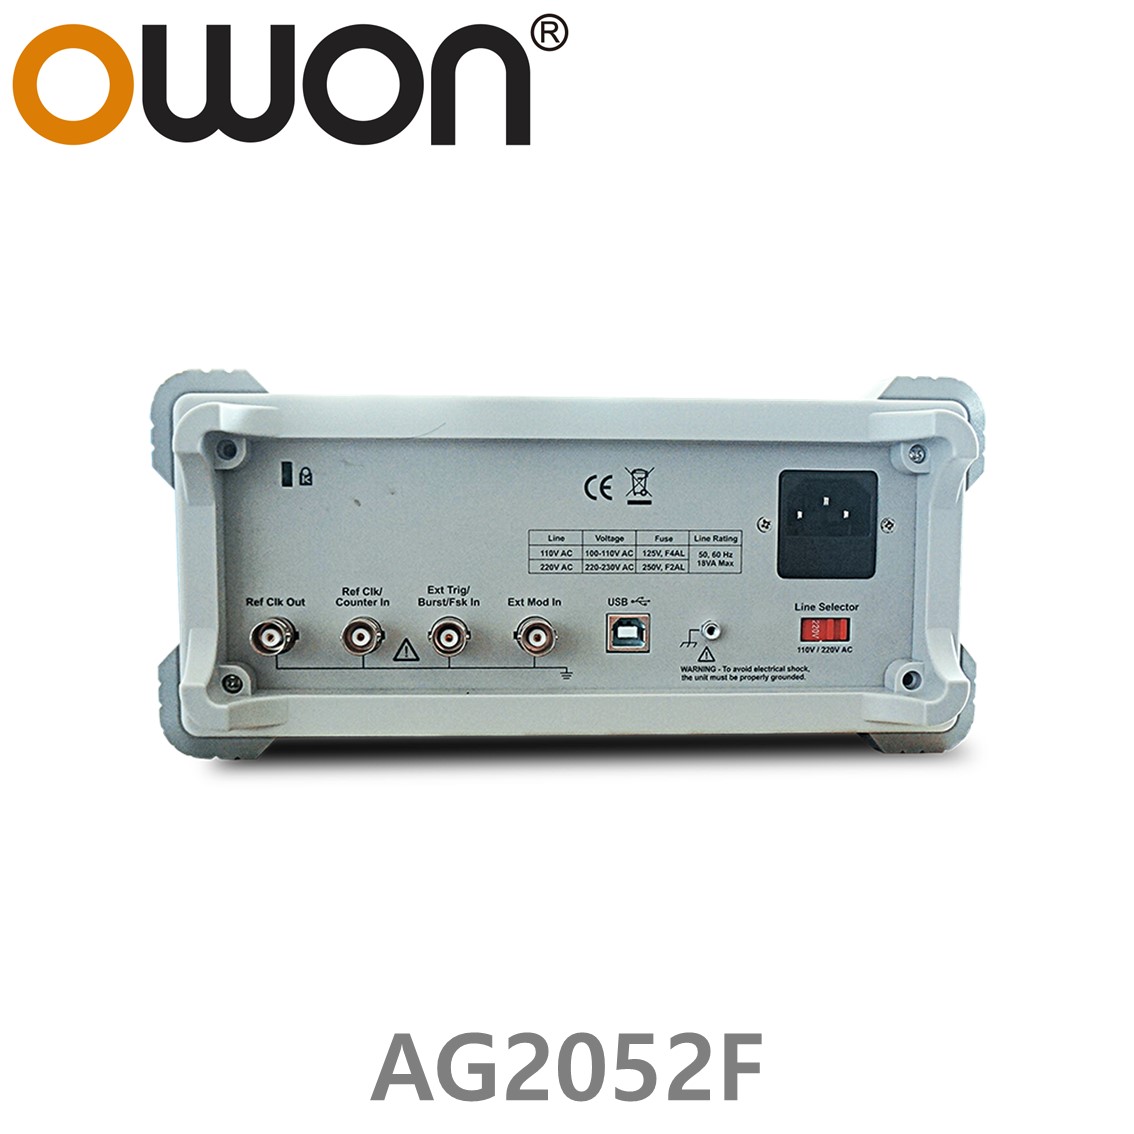 [ OWON ] AG2052F 임의 파형발생기 2CH, 50MHz, 250MS/s, 주파수카운터포함 포괄적 변조, AM, FM, PM, FSK